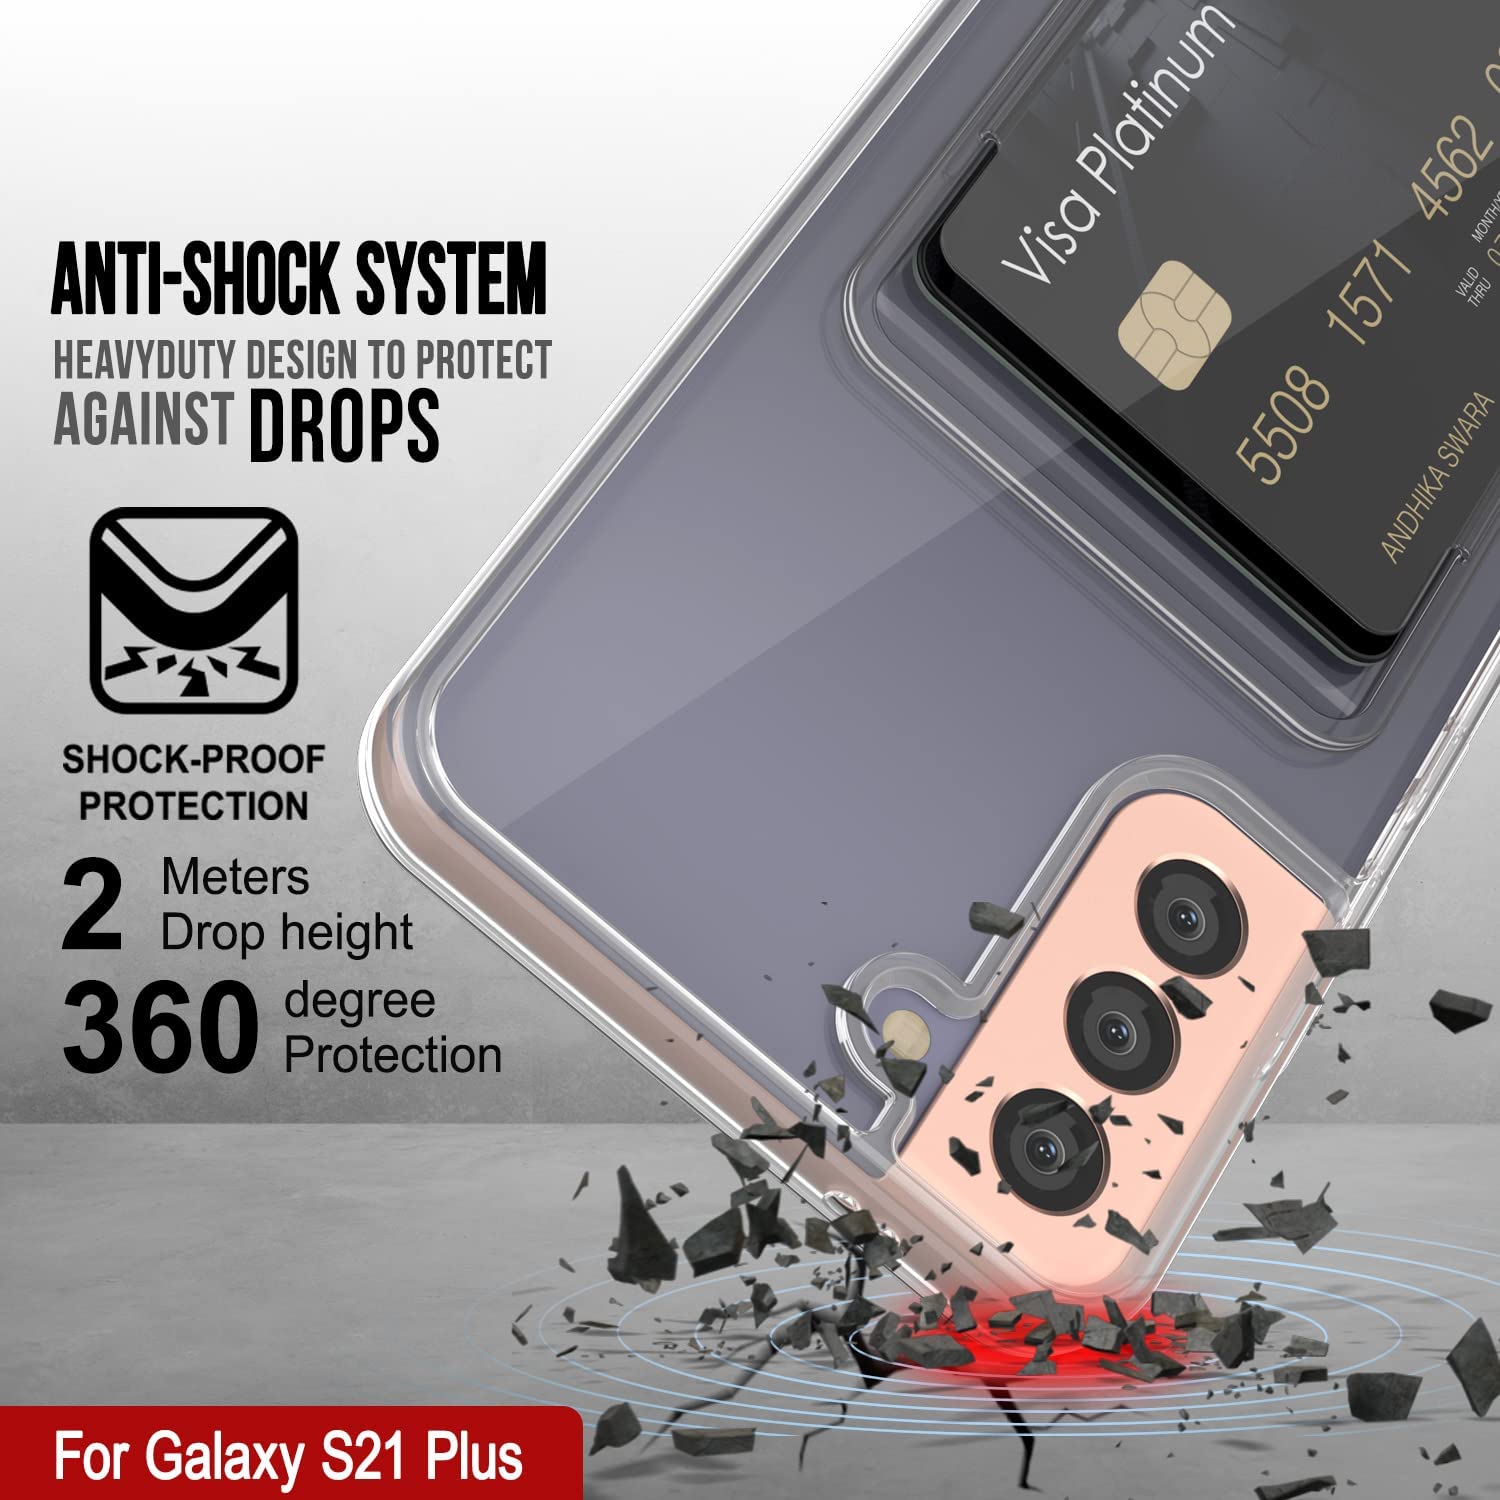 Galaxy S24 Plus Card Holder Case [Crystal CardSlot Series] [Slim Fit] [Teal]